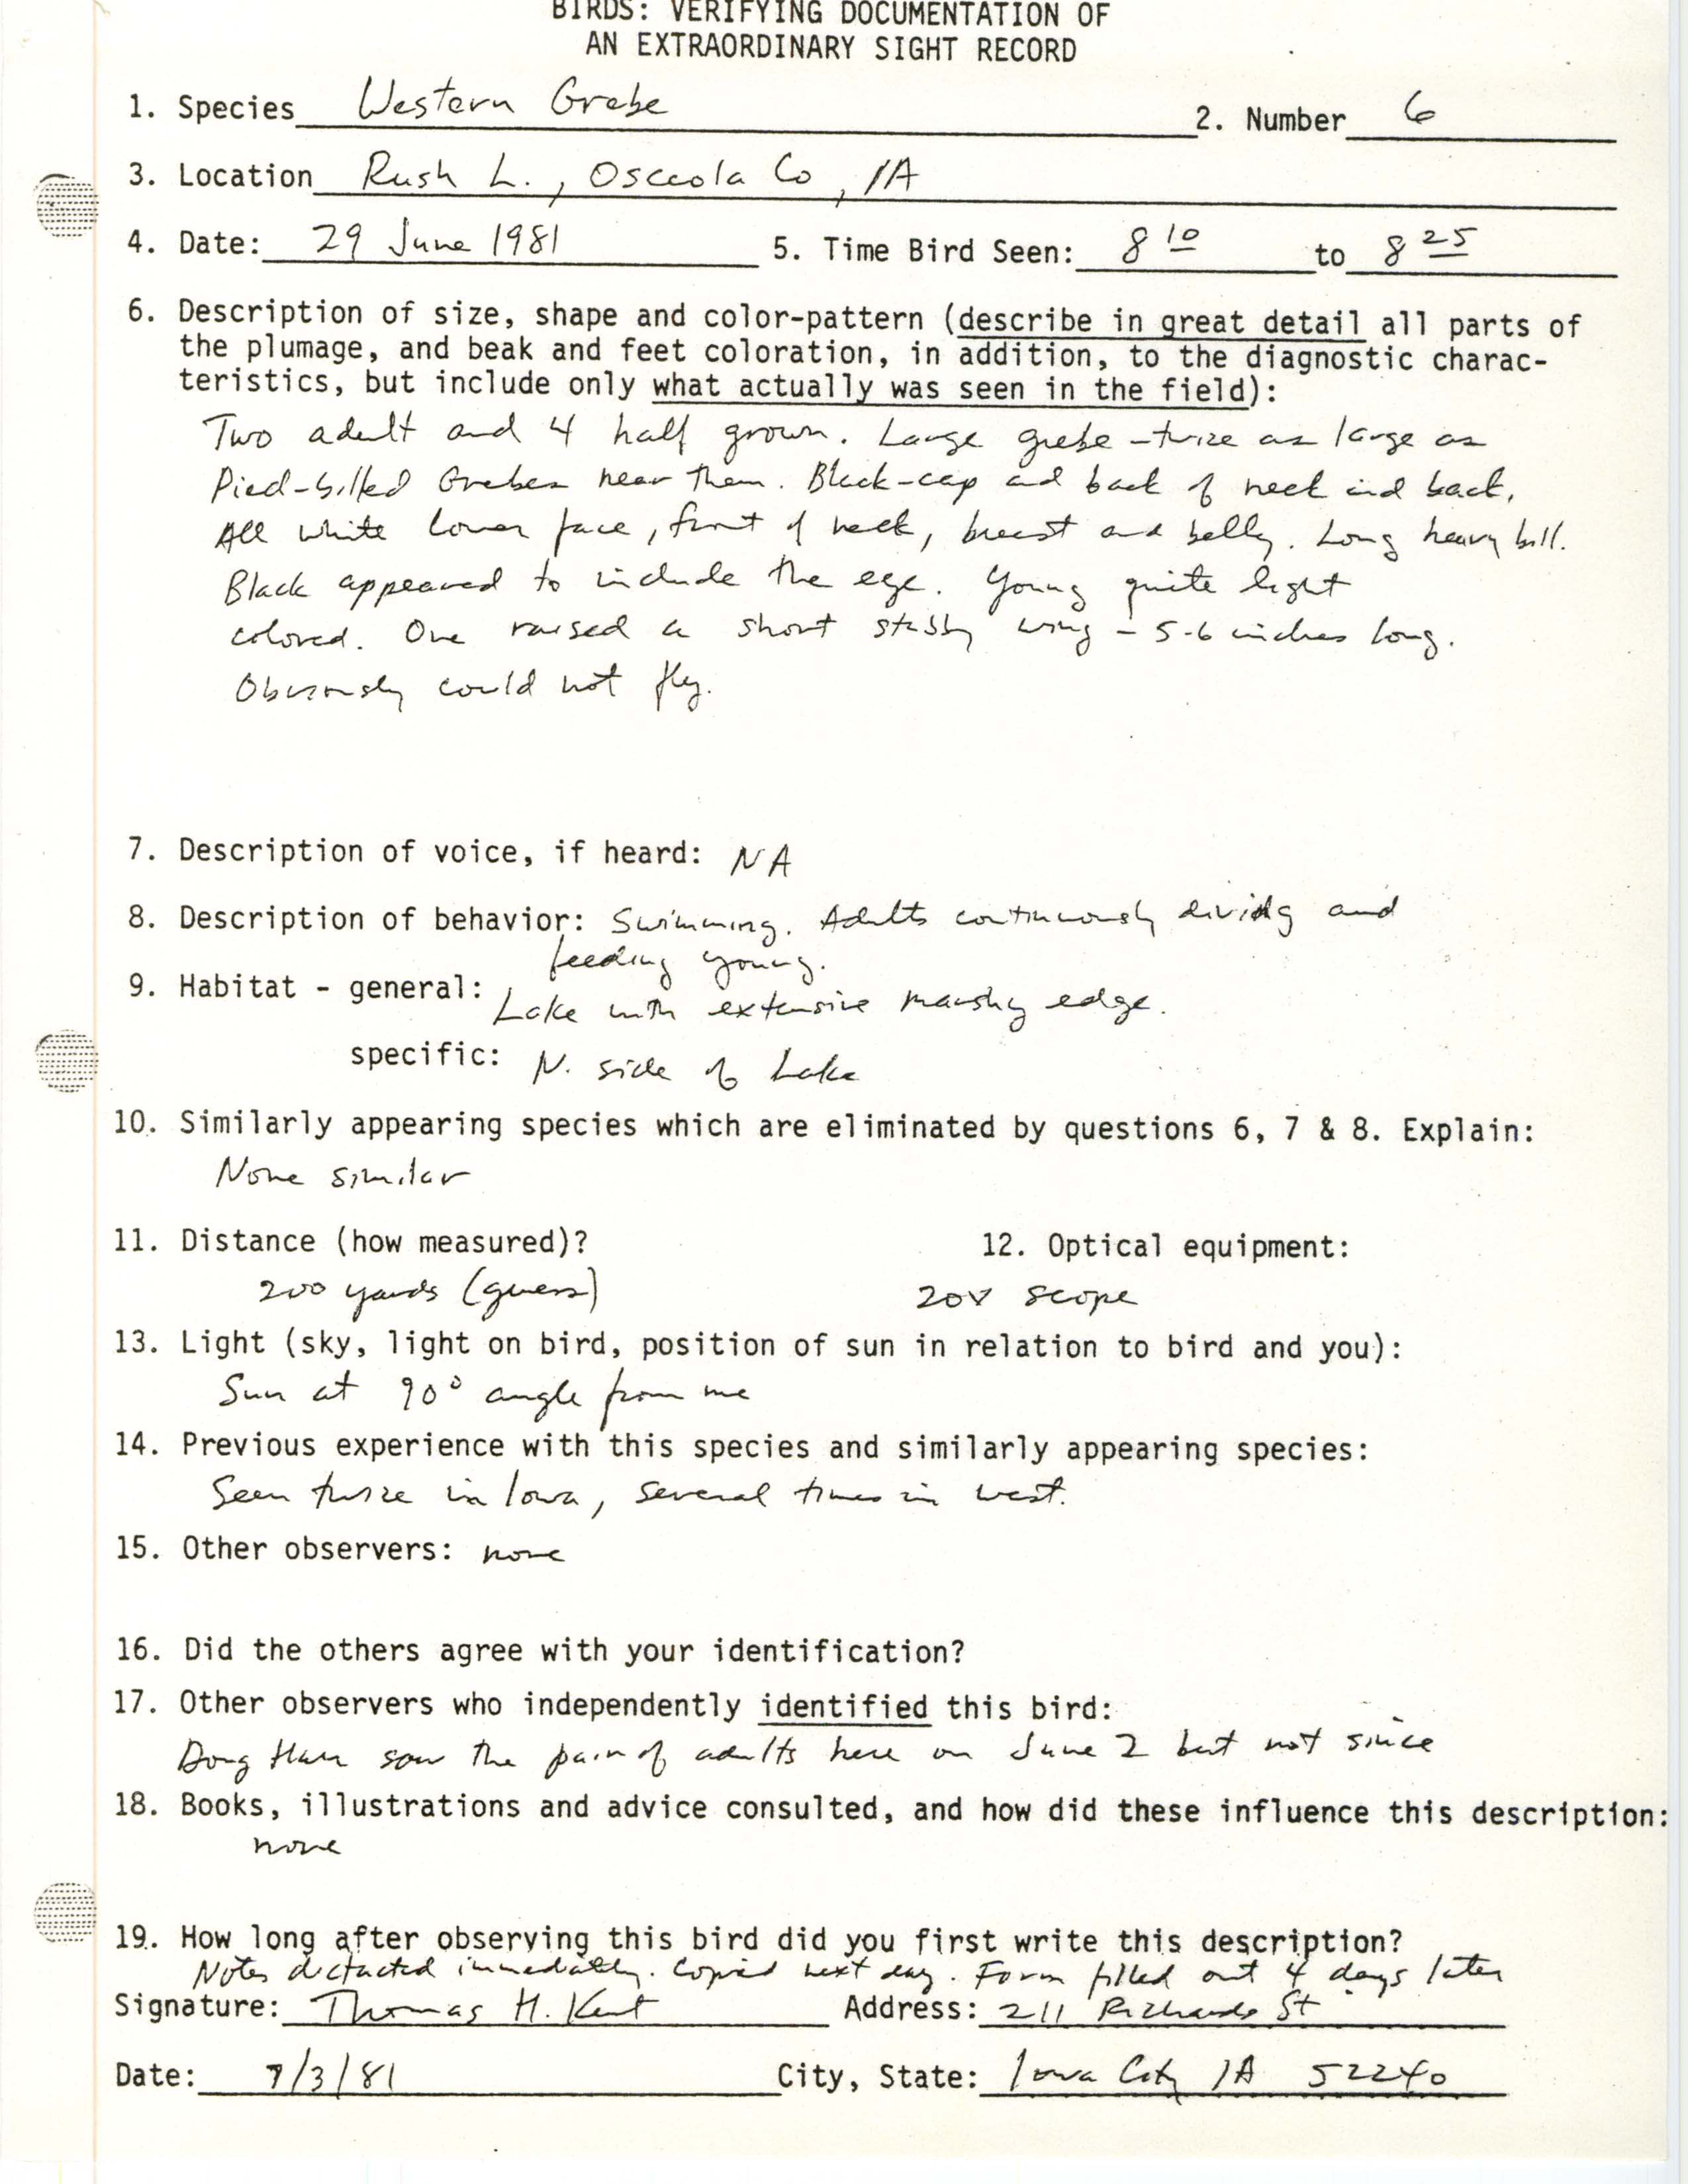 Rare bird documentation form for Western Grebe at Rush Lake, 1981